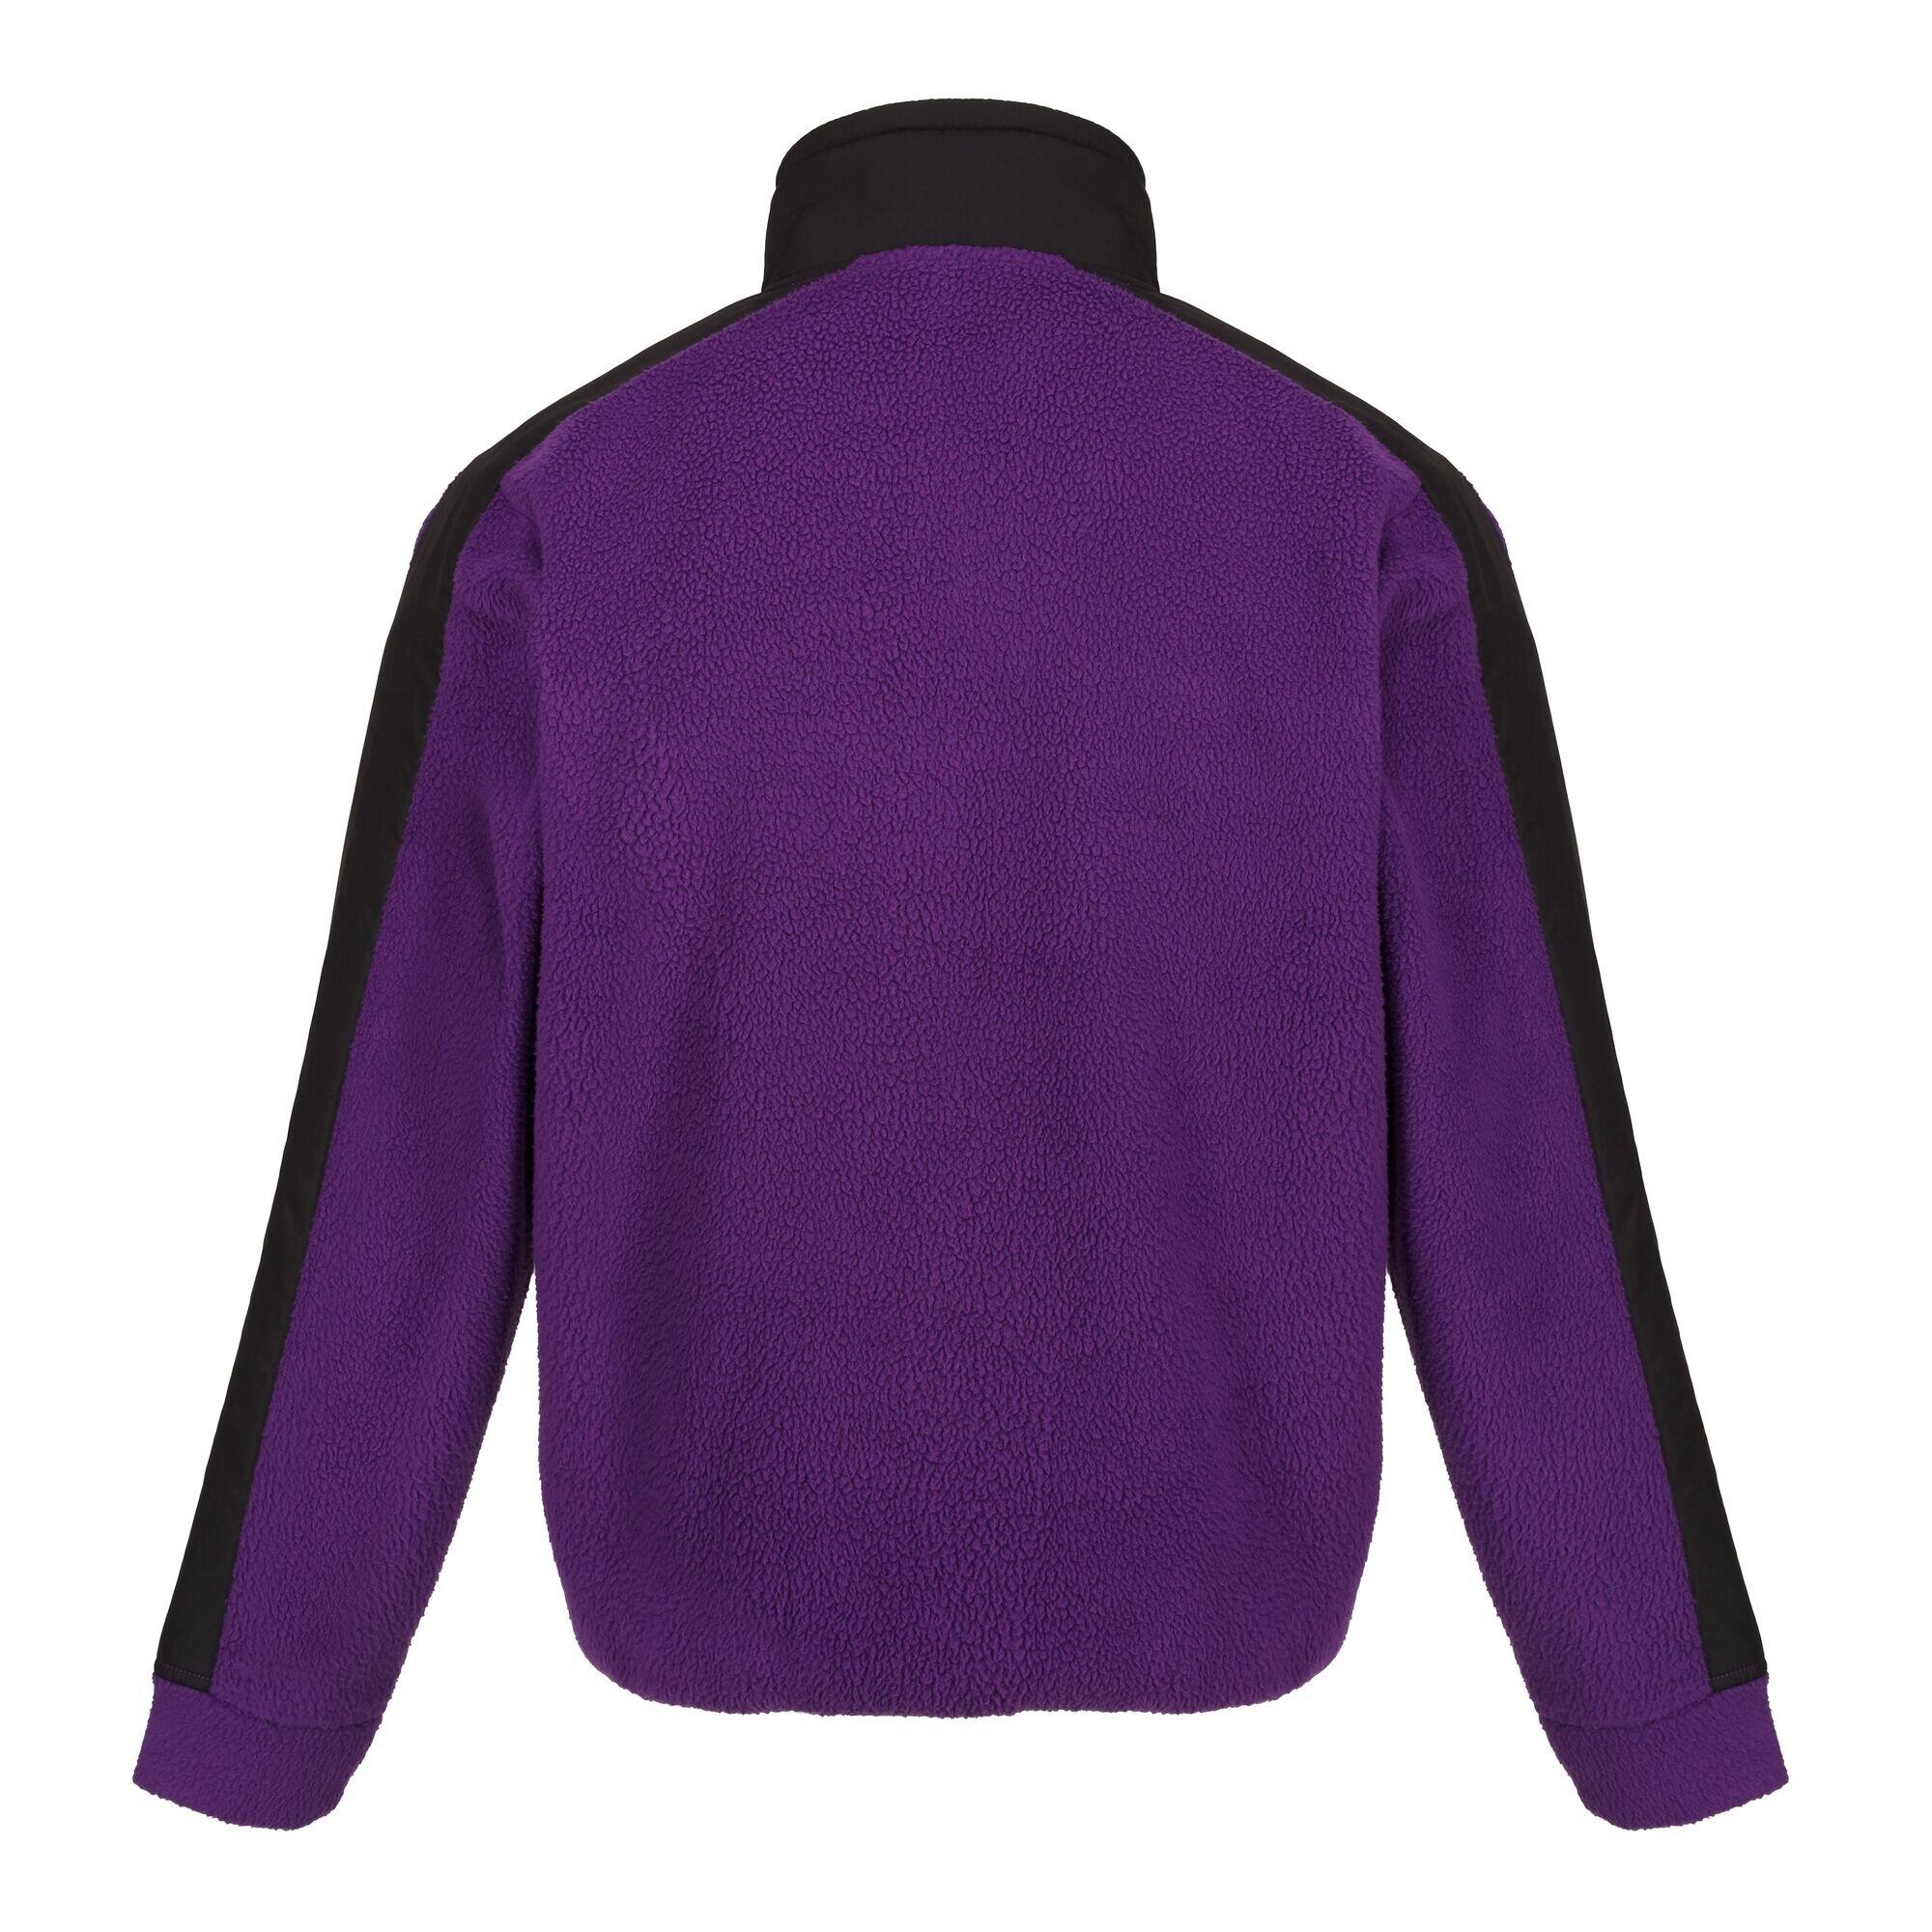 Mens Vintage Fleece Top (Juniper Purple/Black) 2/5